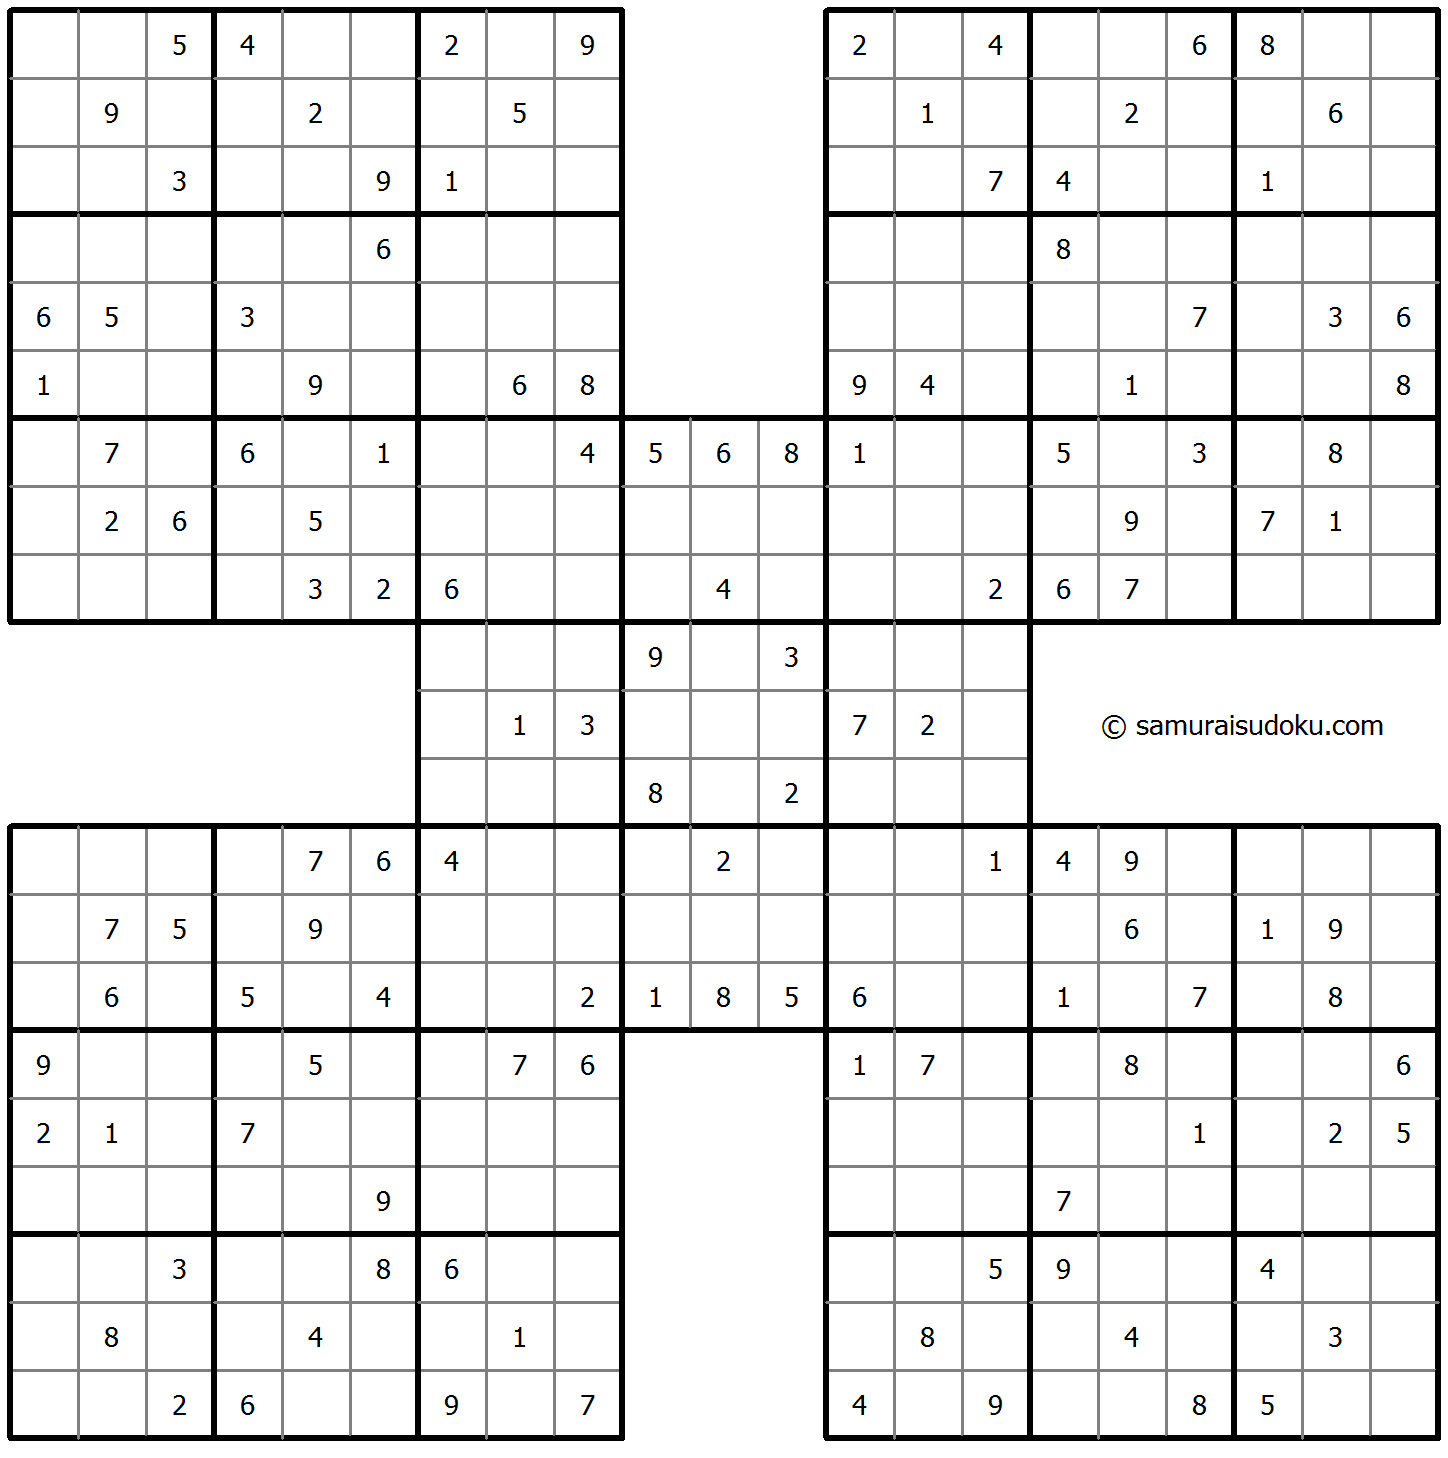 Samurai Sudoku 24-May-2021